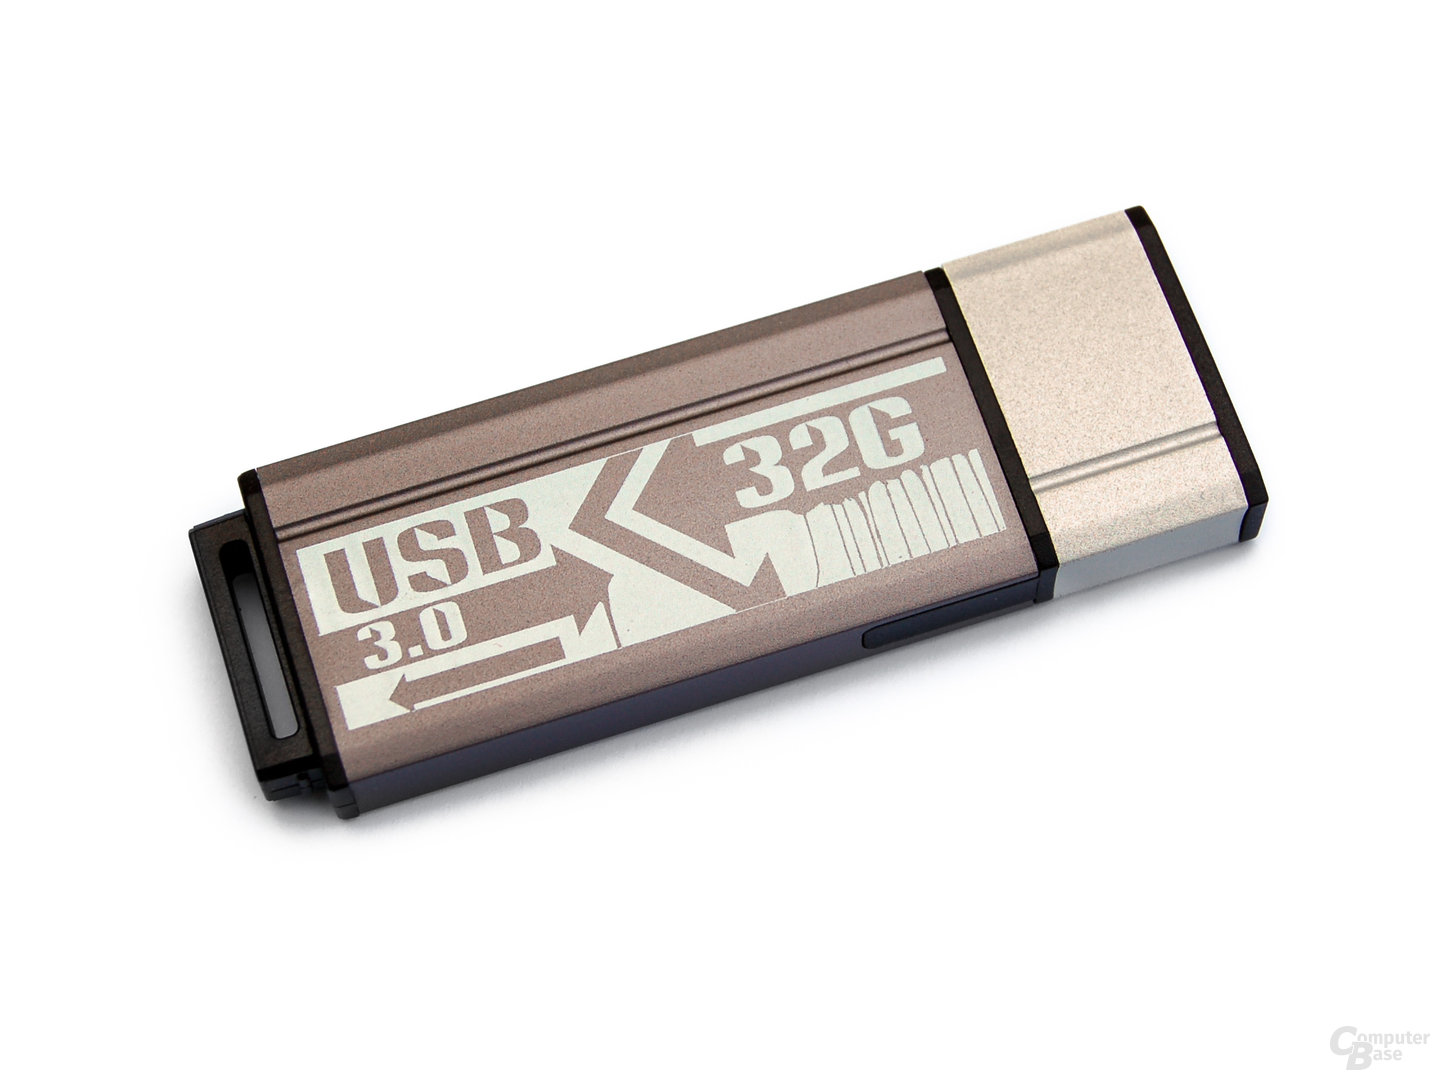 Mach Xtreme Technology FX USB 3.0 Pen